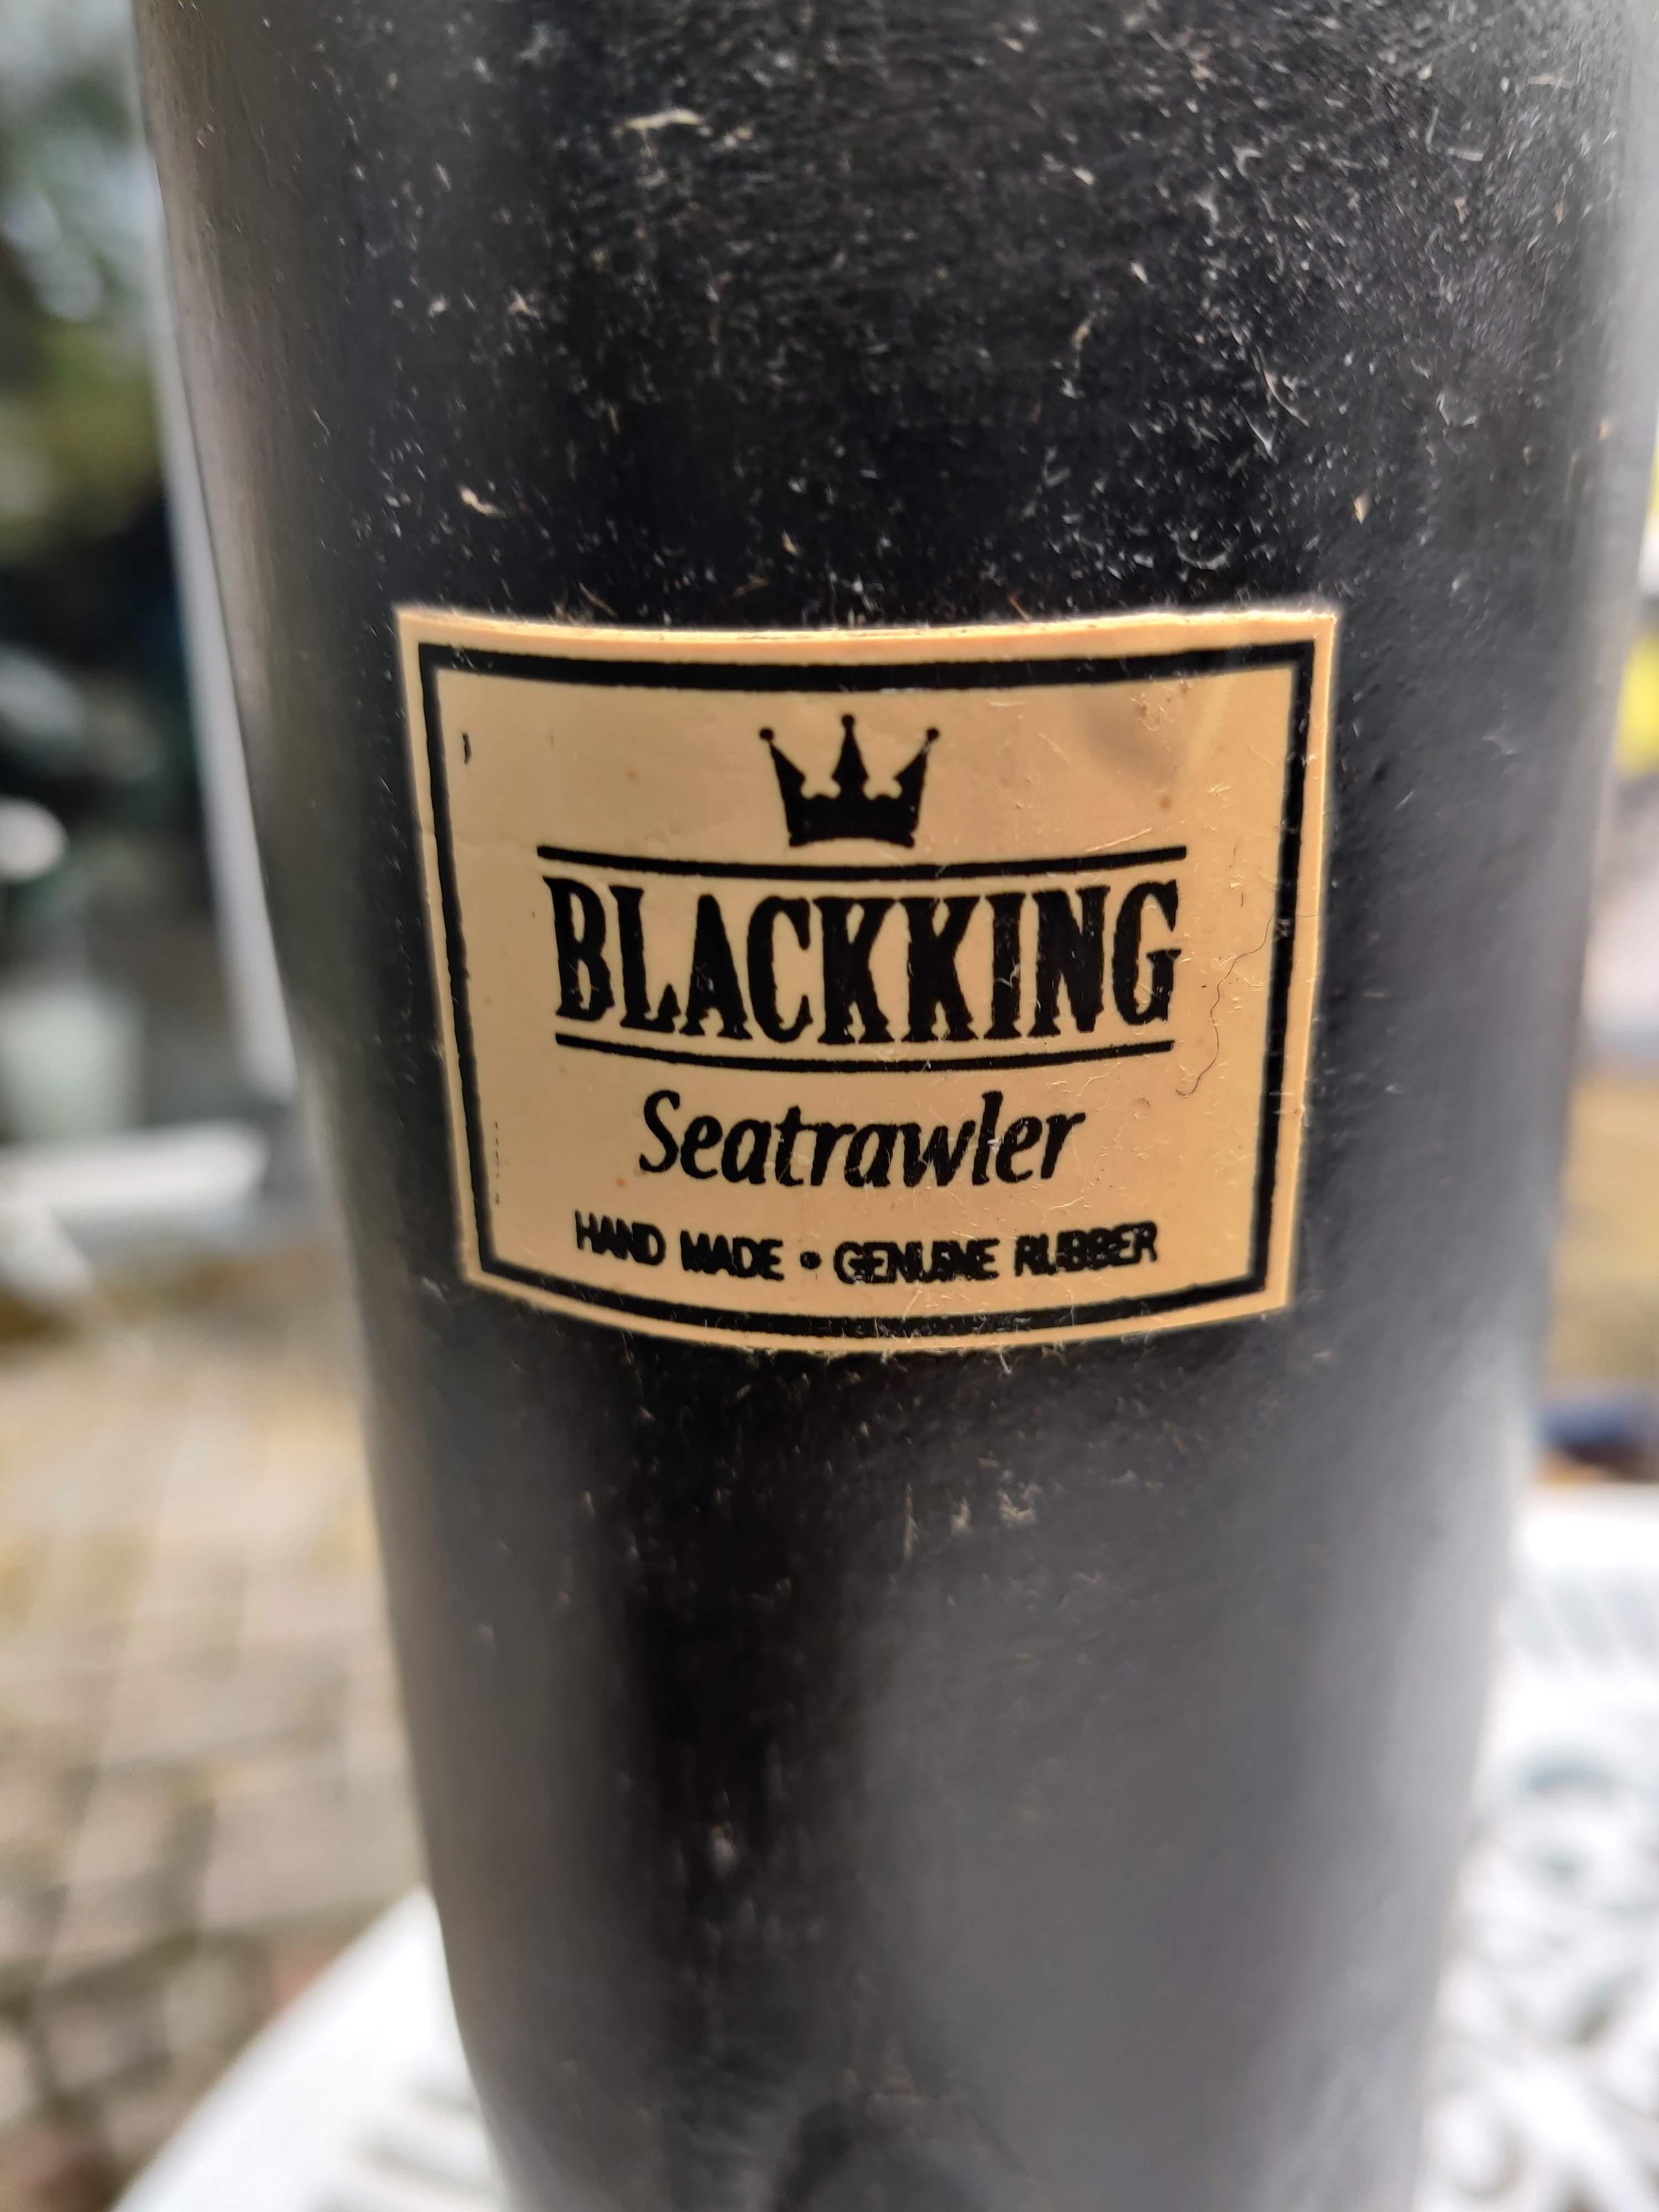 BLACKKING "Seatrawler"